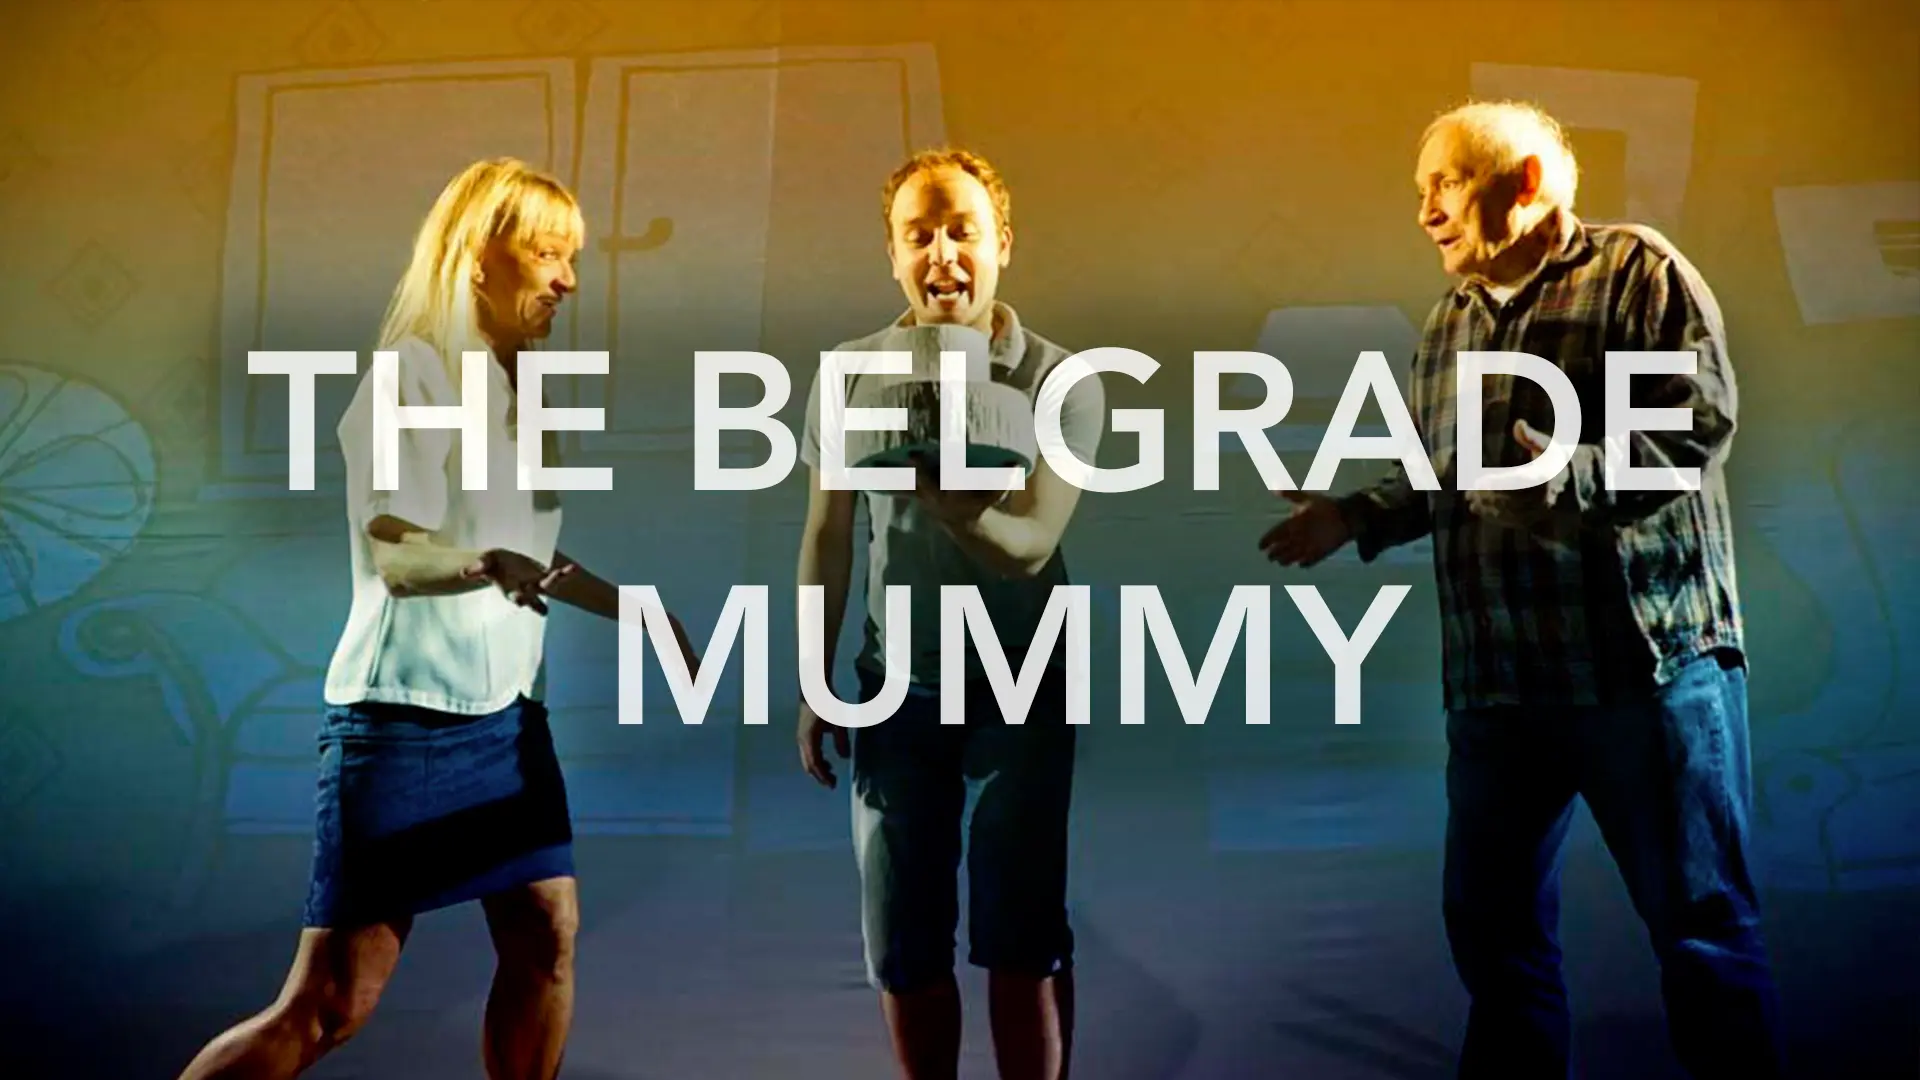 The Belgrade Mummy performance